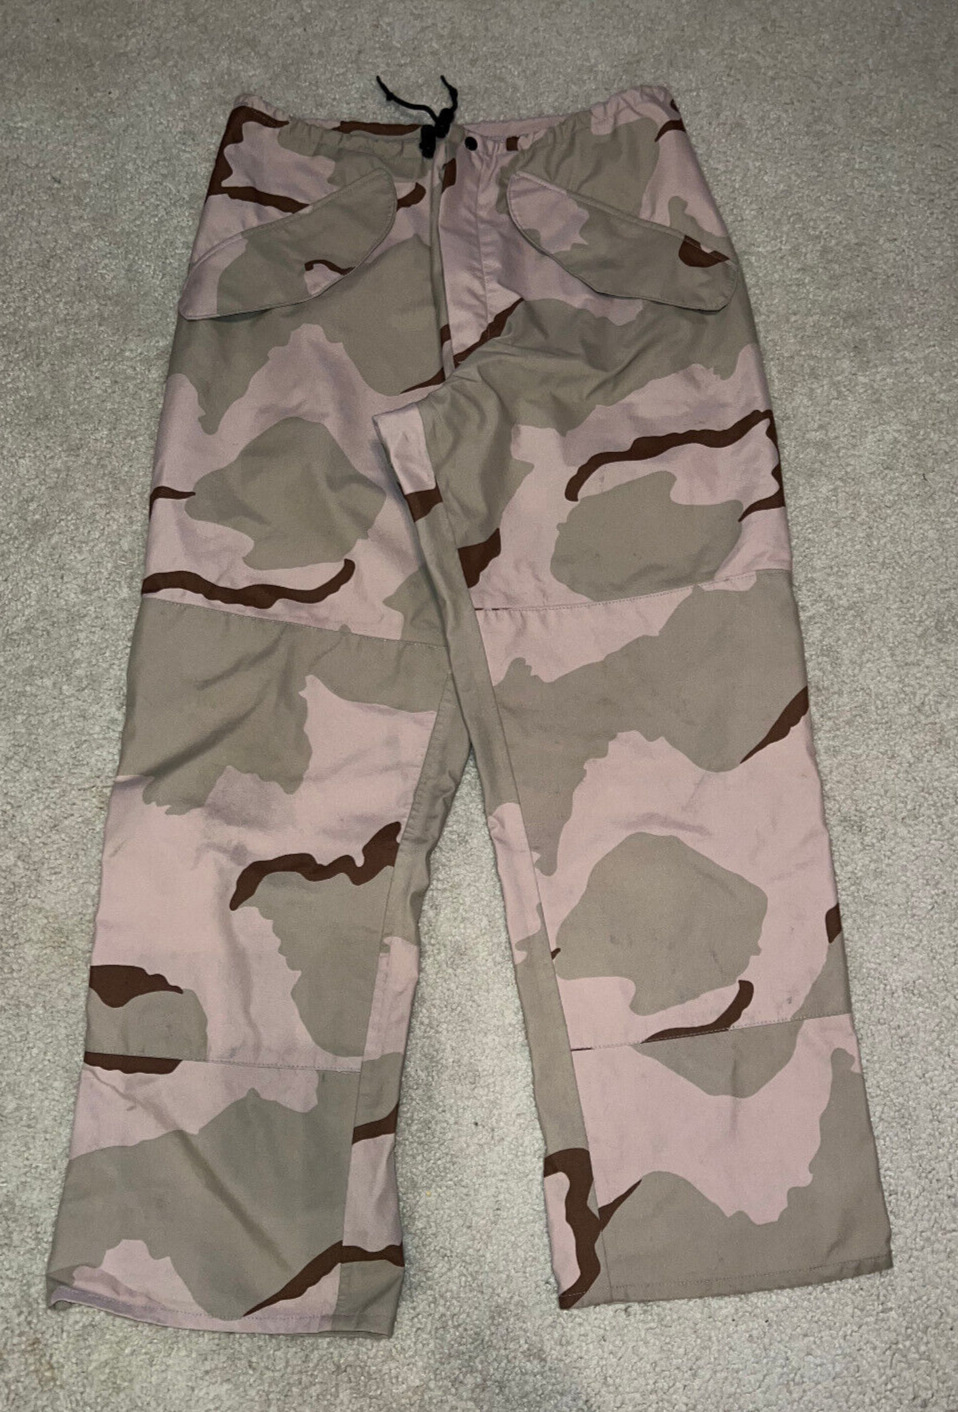 USGI Desert Cold Weather Trousers Pants Gore Seam Camo Military - MEDIUM REGULAR